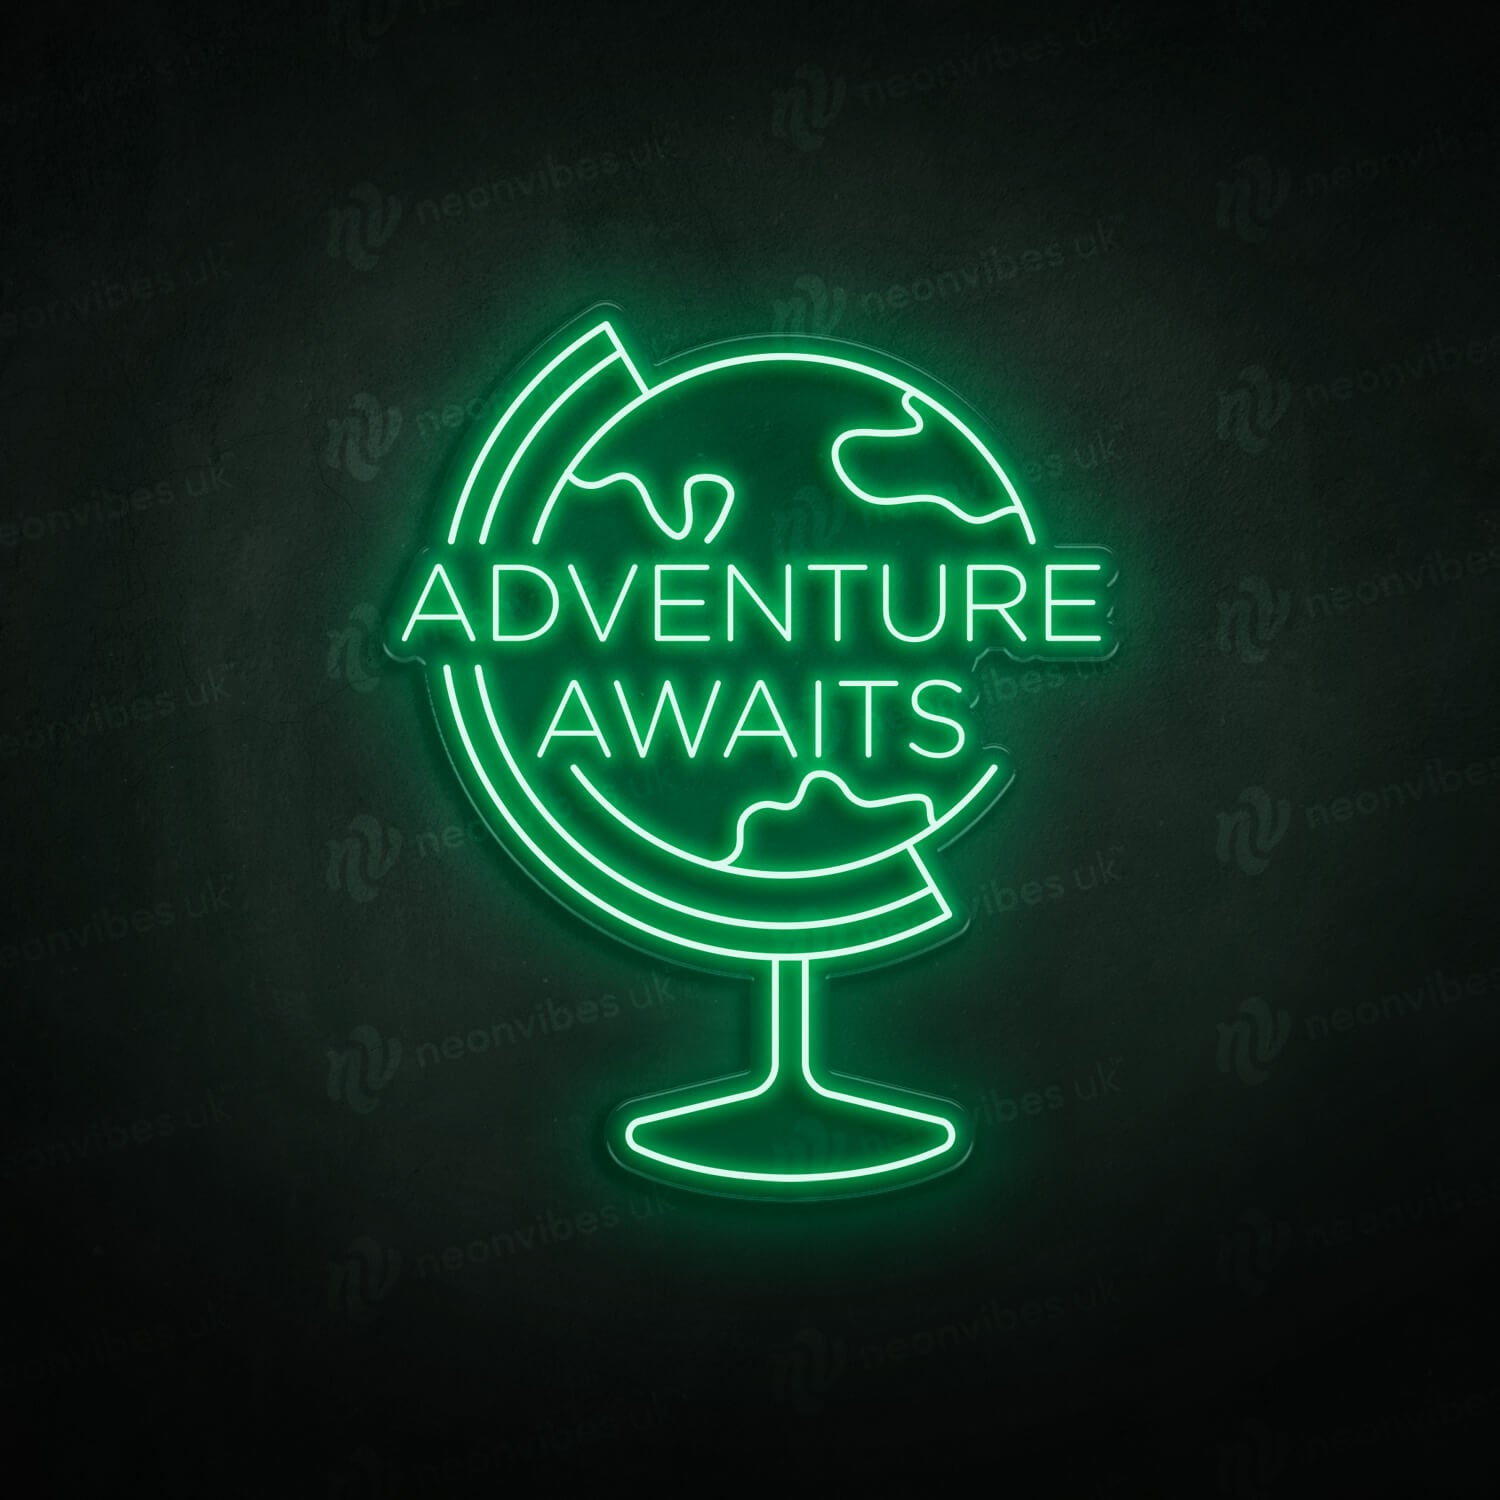 Adventure awaits neon sign